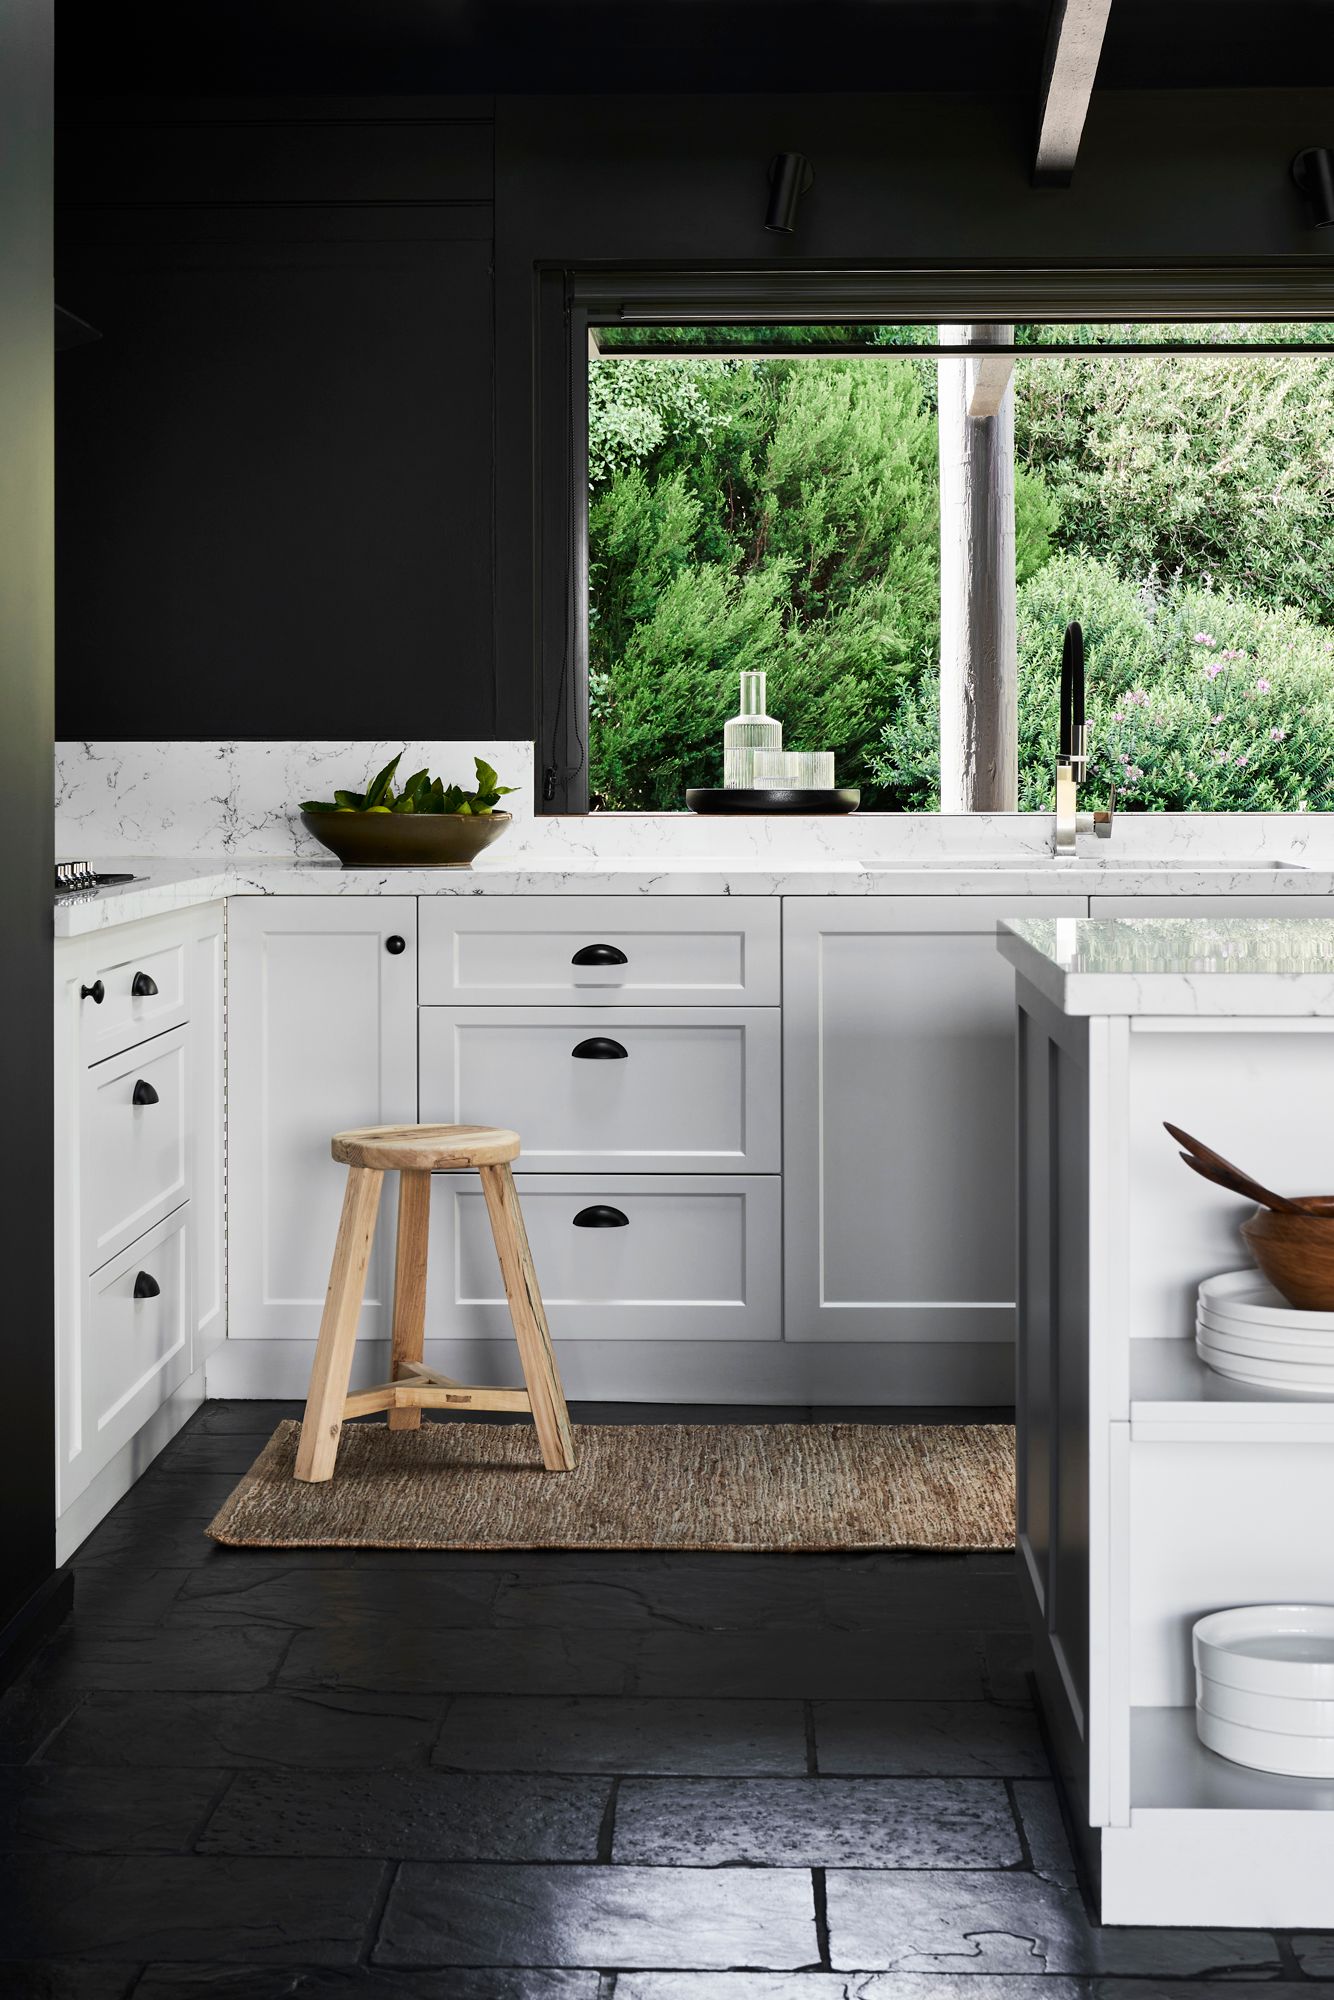 Jumoku Daylesford. Showing the white and black kitchen interior